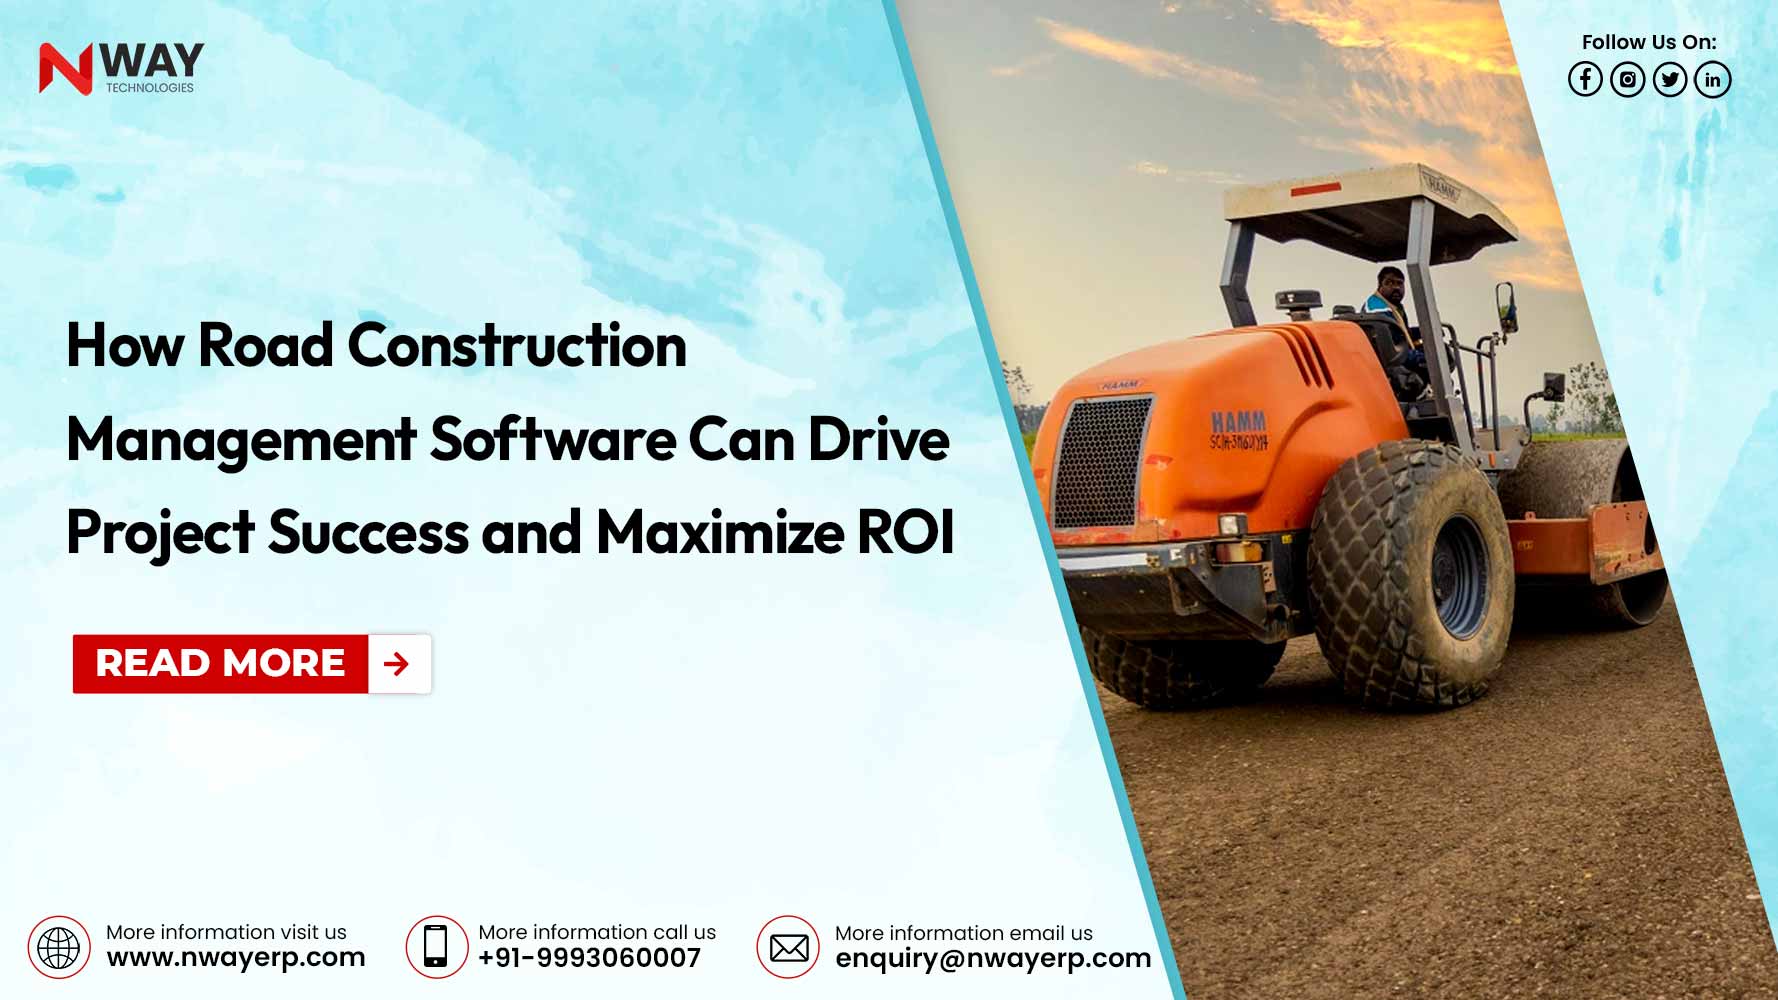 Road Construction Management Software